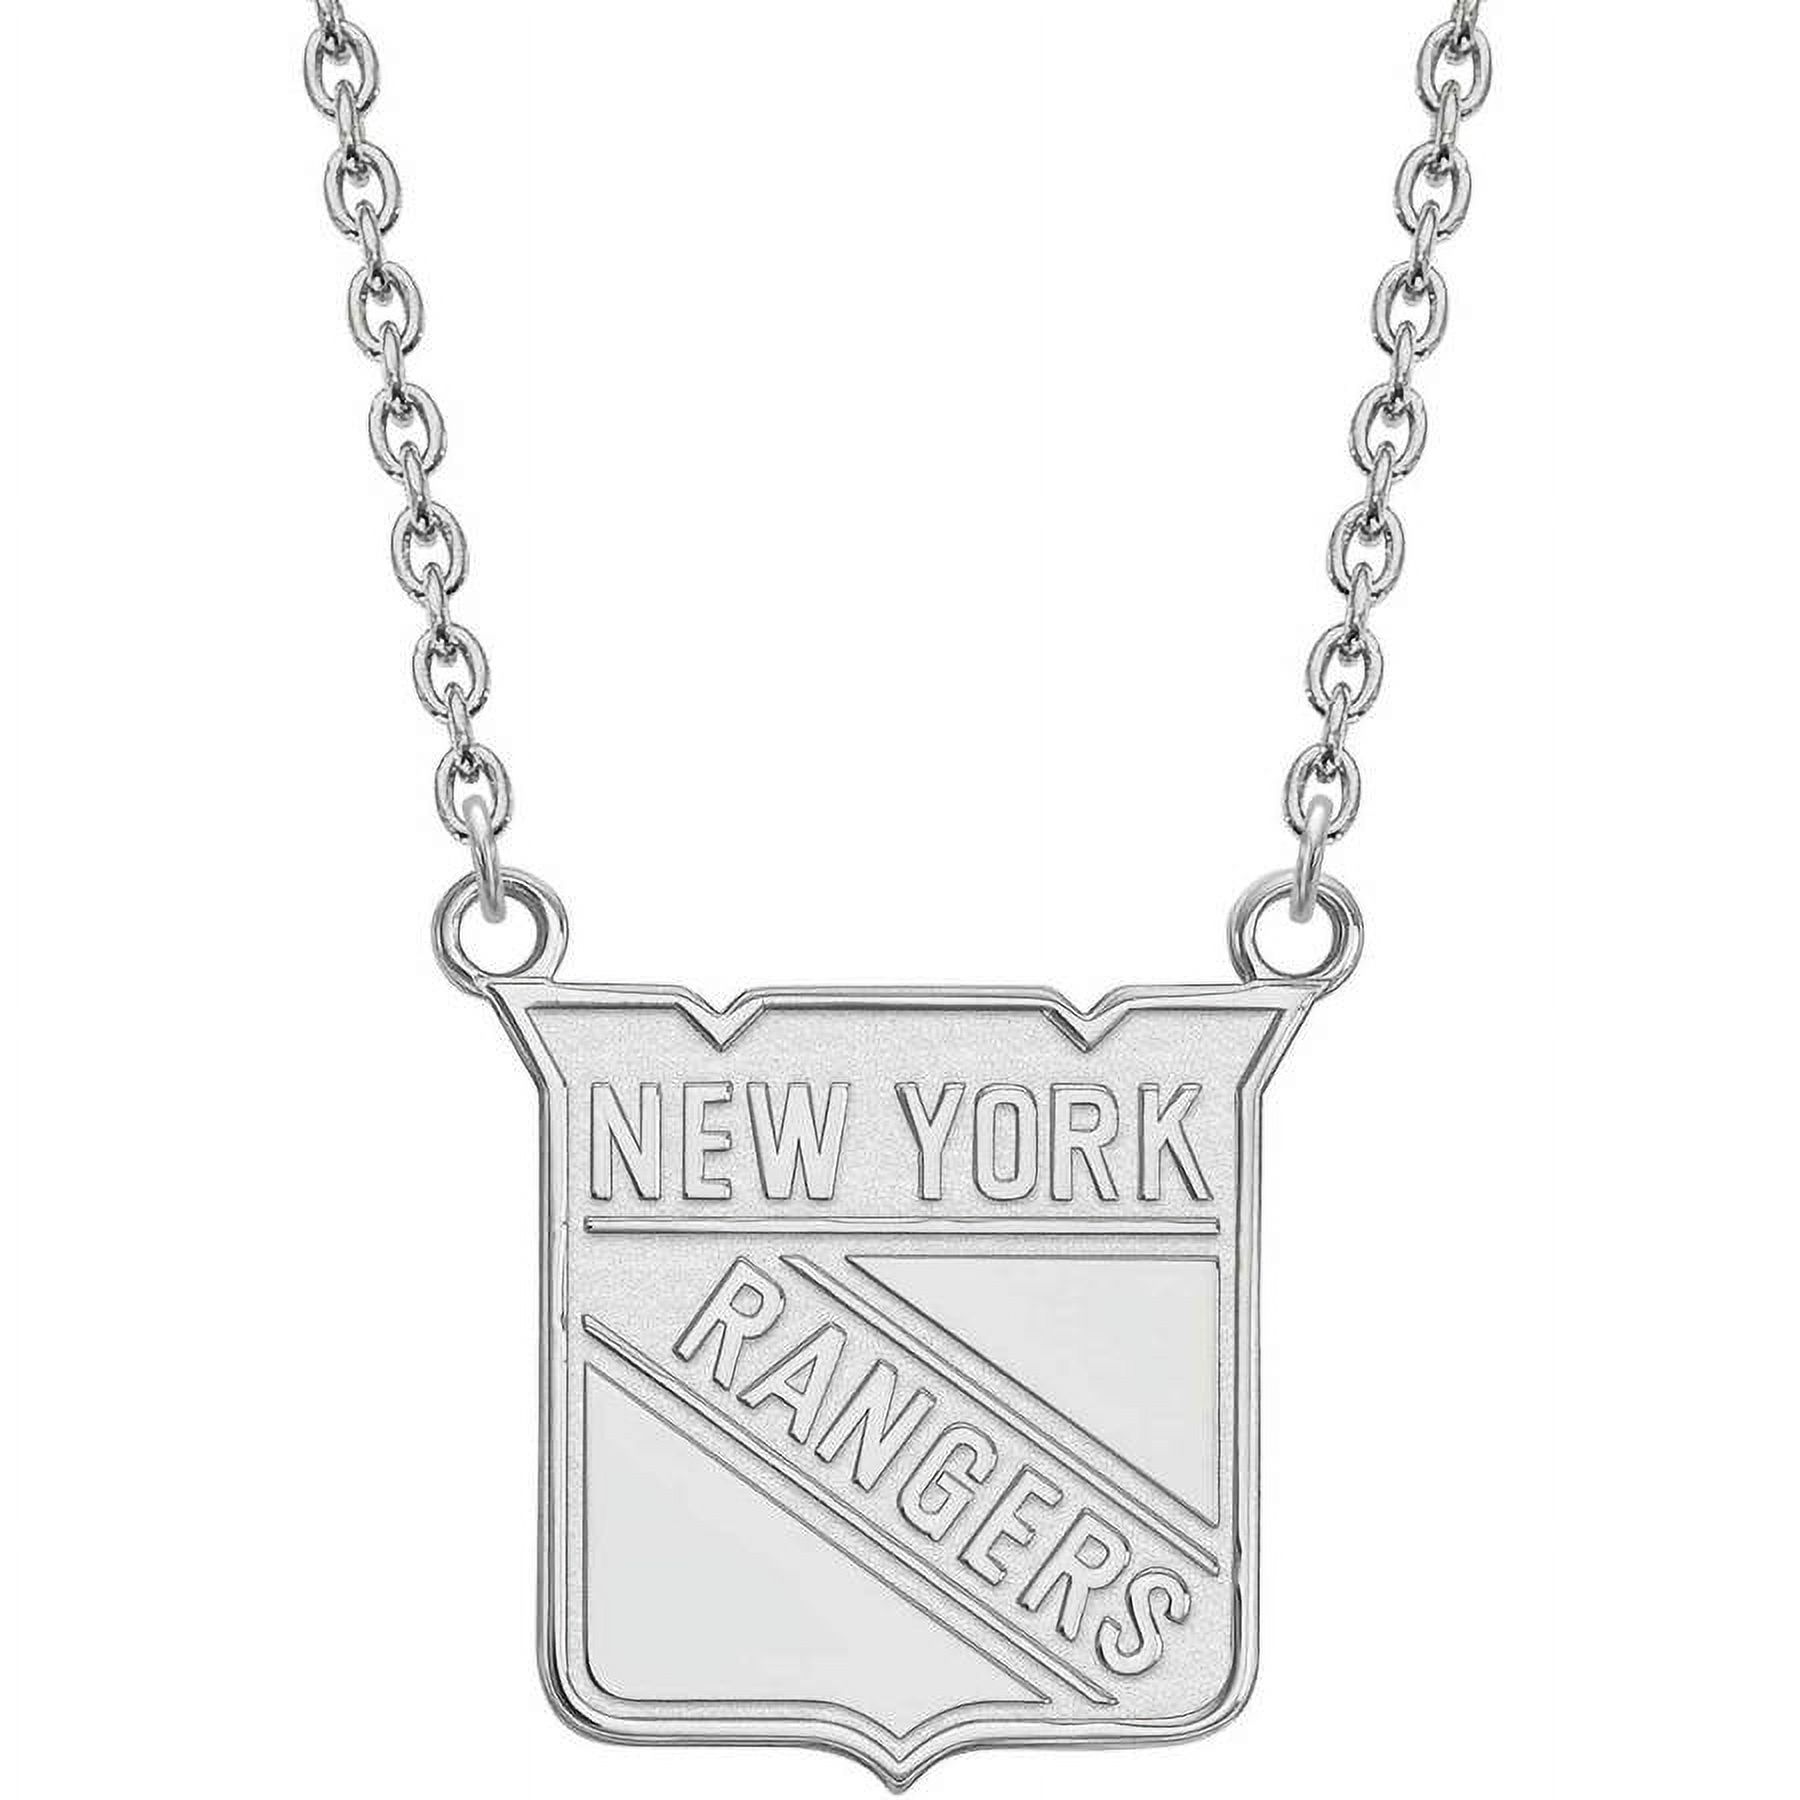 LogoArt 14 Karat White Gold NHL New York Rangers Large Pendant with Necklace - image 1 of 5